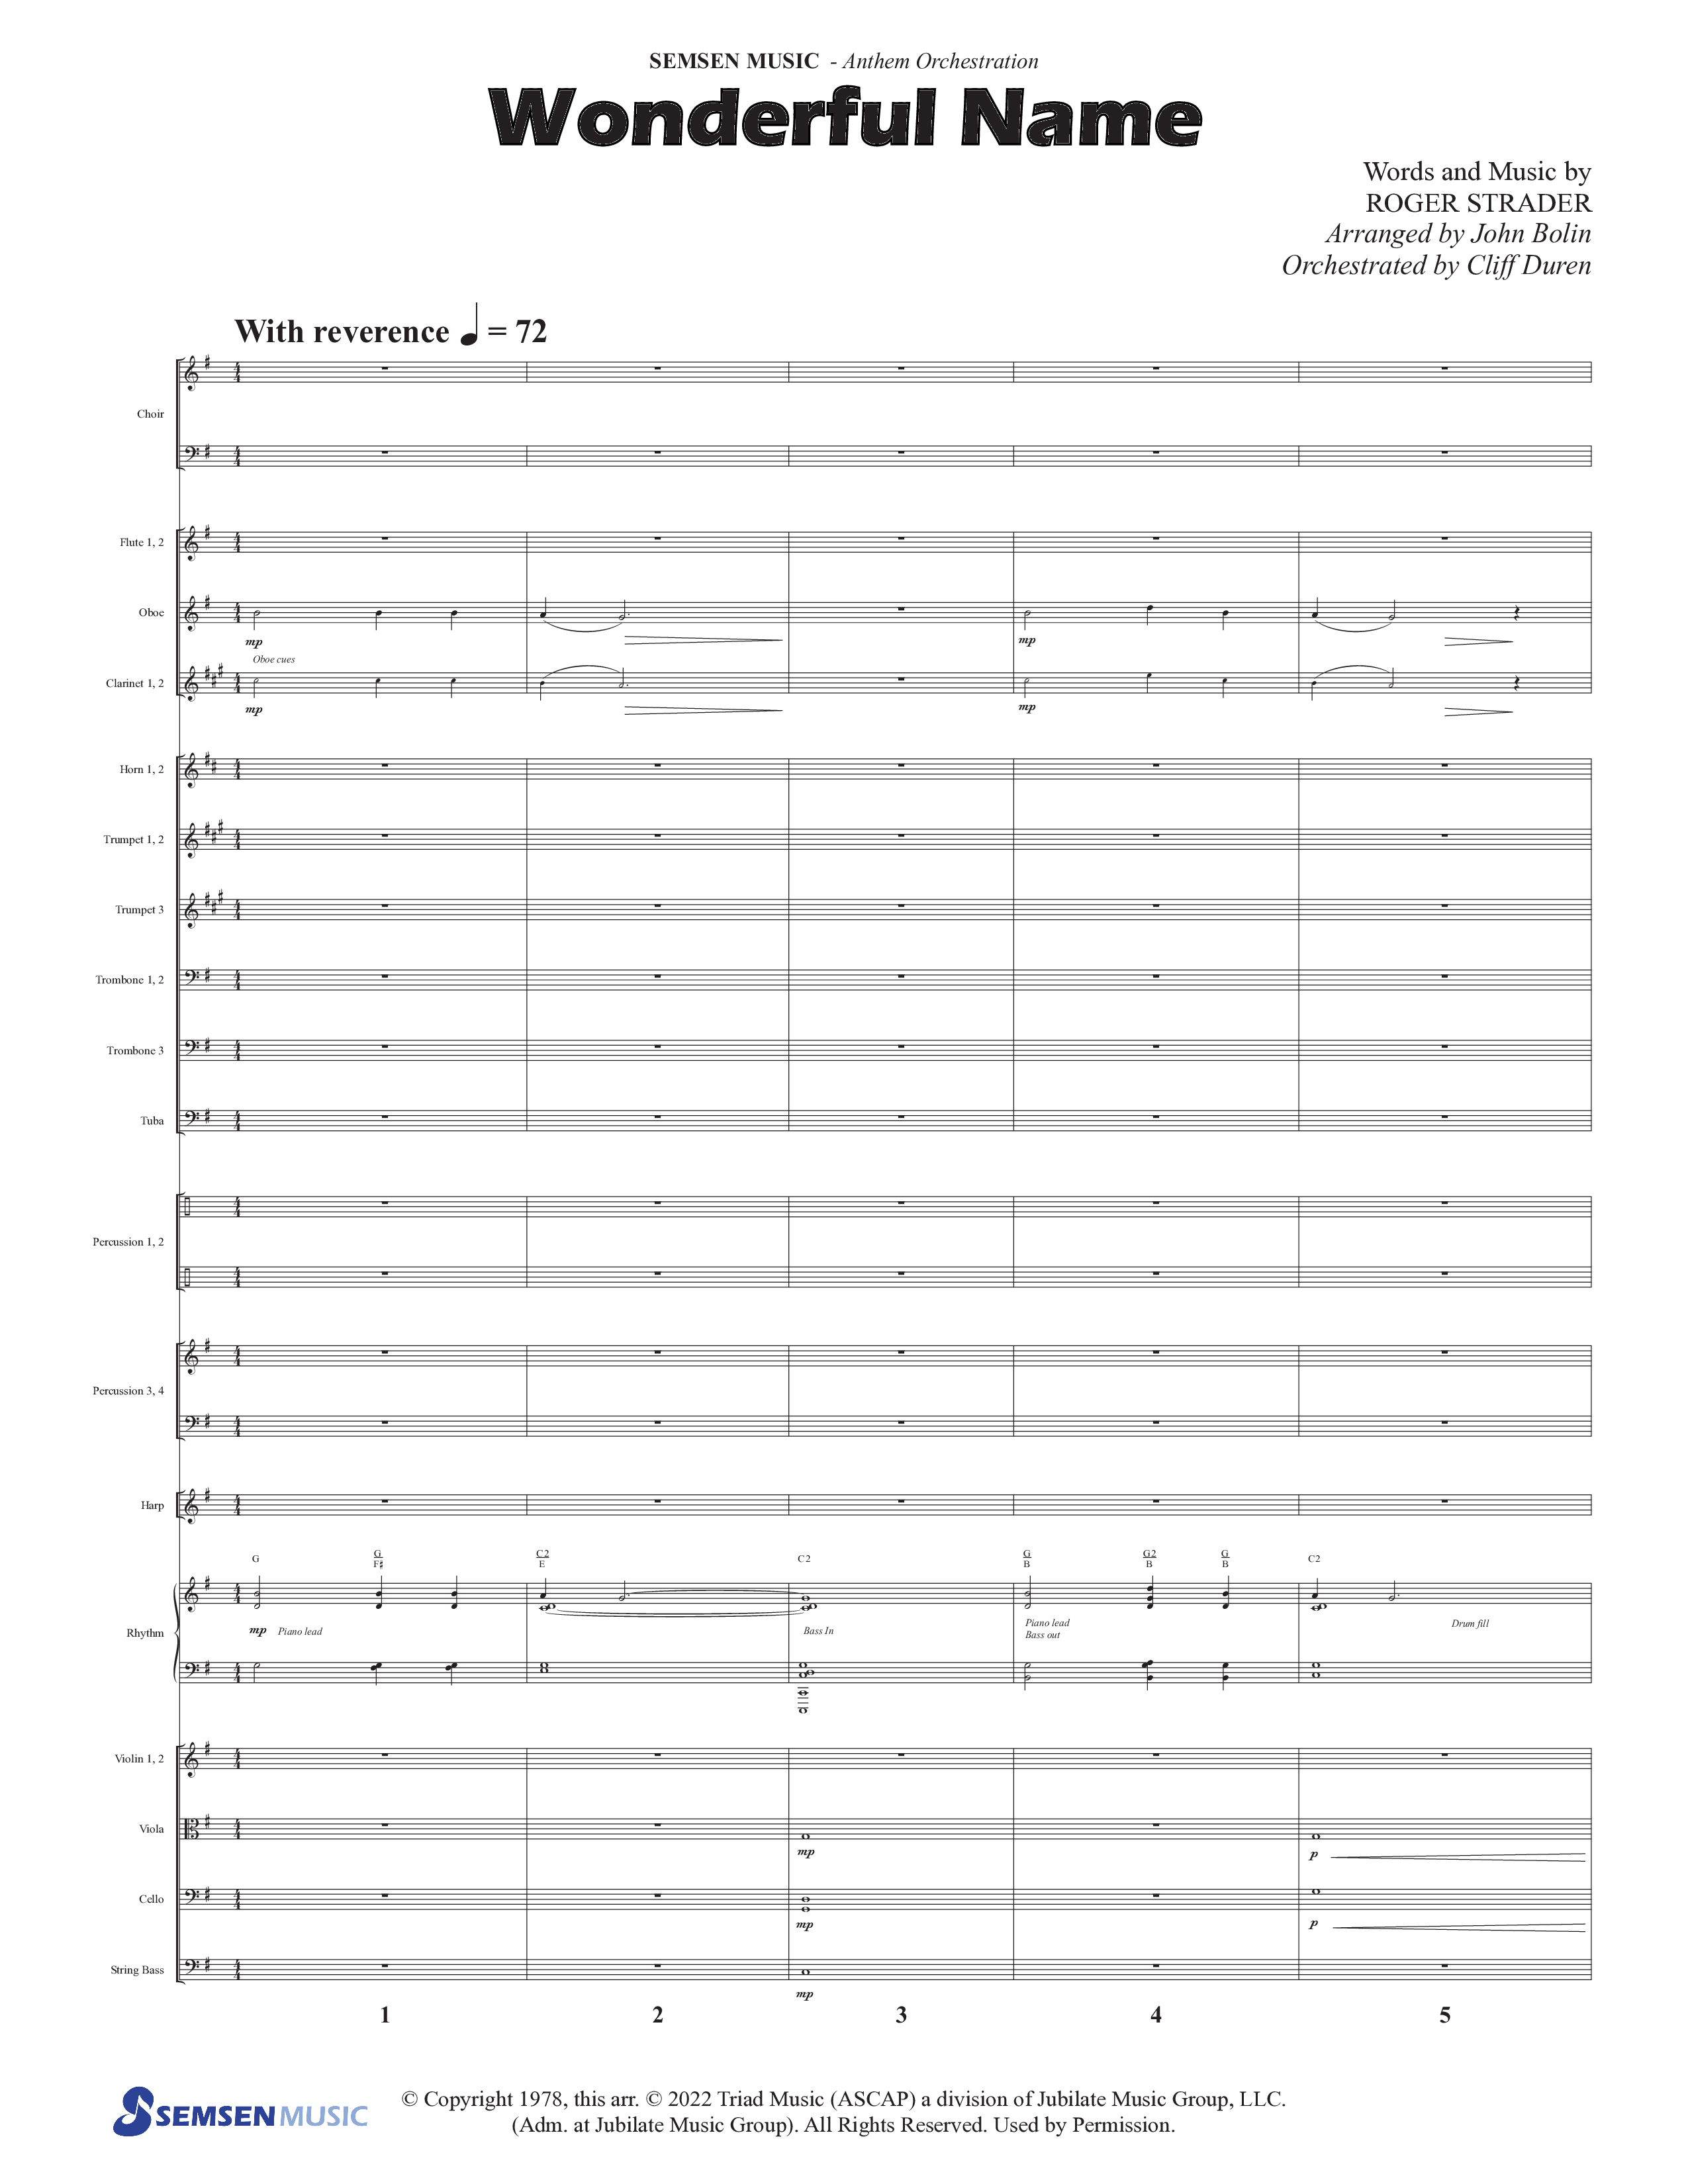 Wonderful Name (Choral Anthem SATB) Conductor's Score (Semsen Music / Arr. John Bolin / Orch. Cliff Duren)